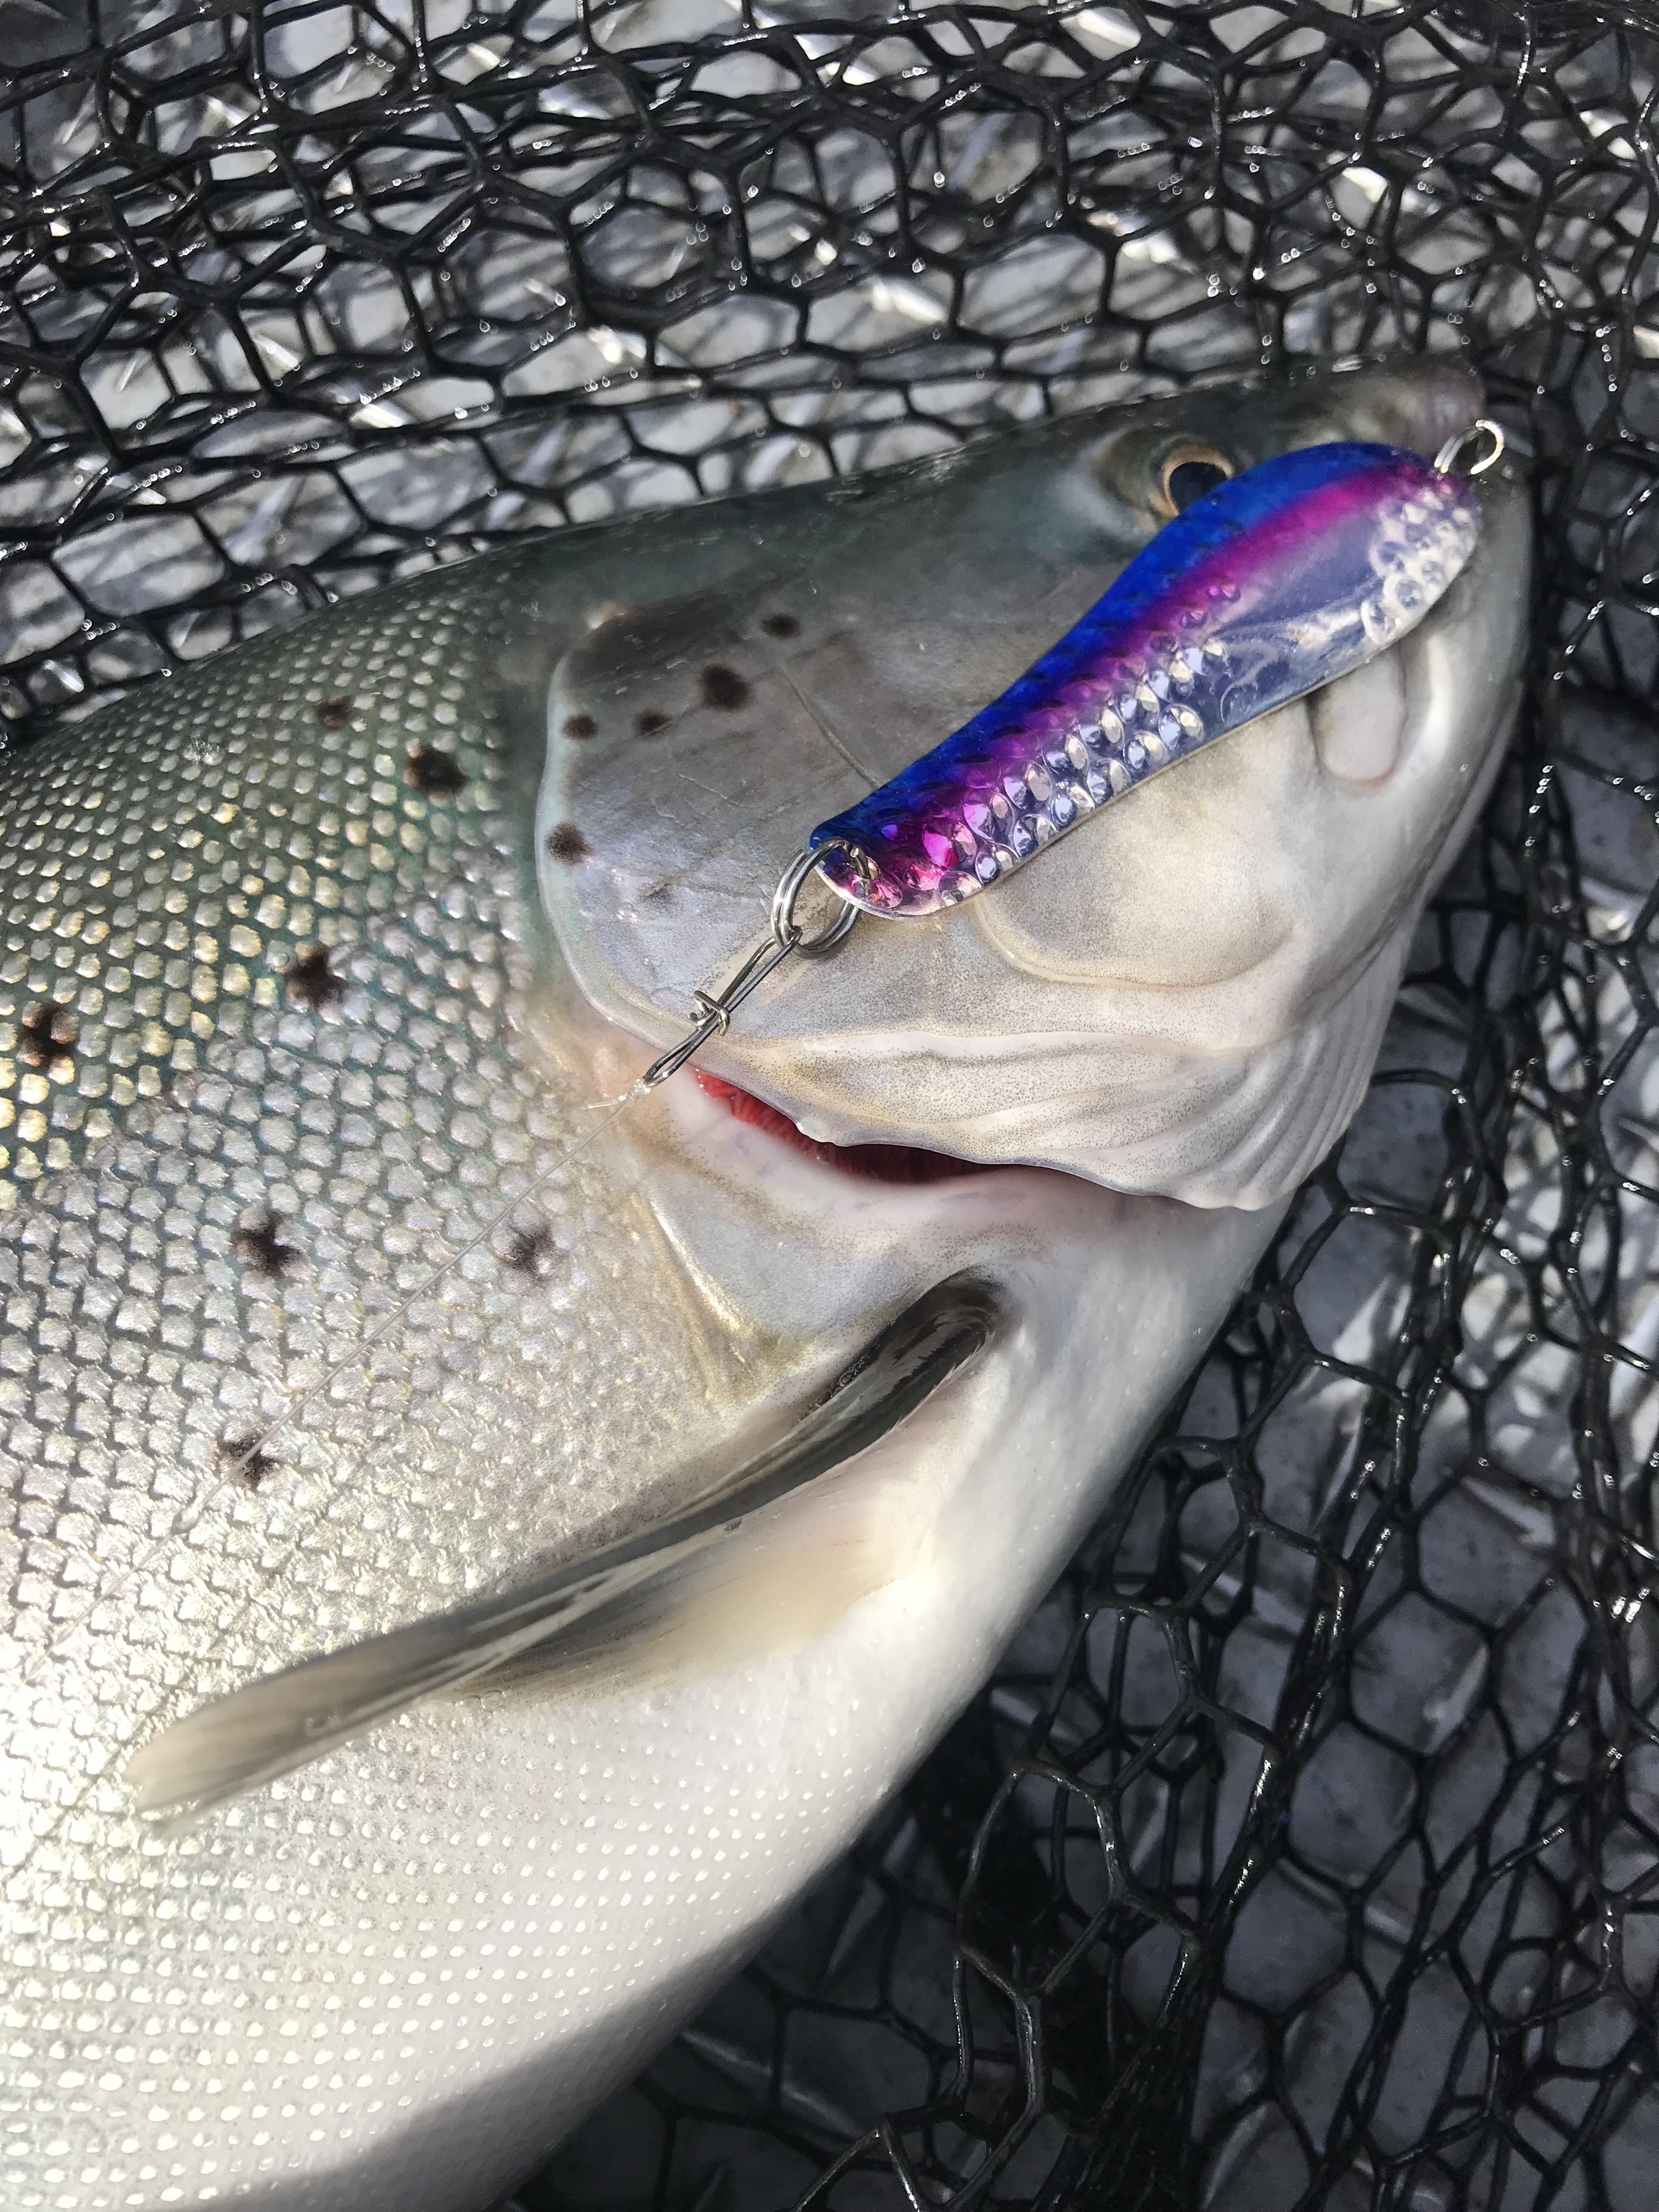 Shasta Lake summer trout fishing. — Jeff Goodwin Fishing